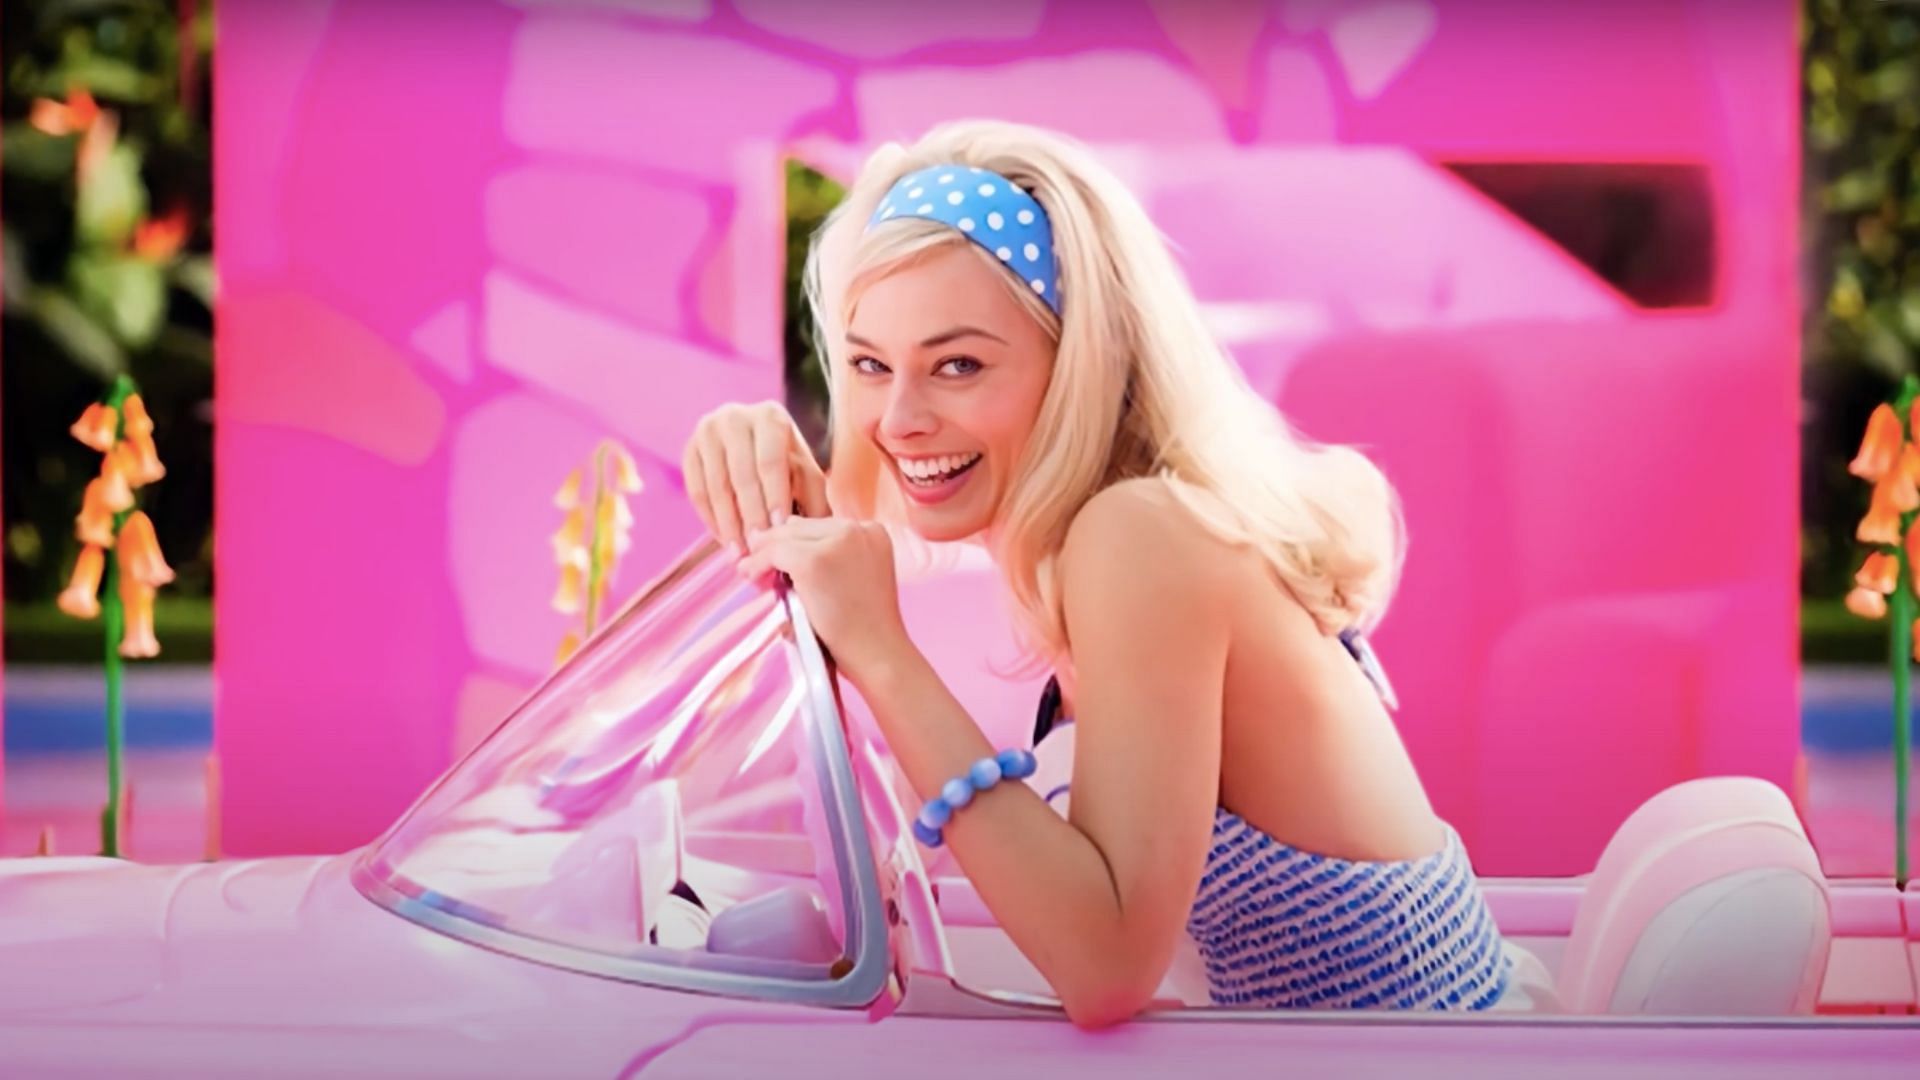 Margot Robbie in Barbie (Image via Smasher/ YouTube)